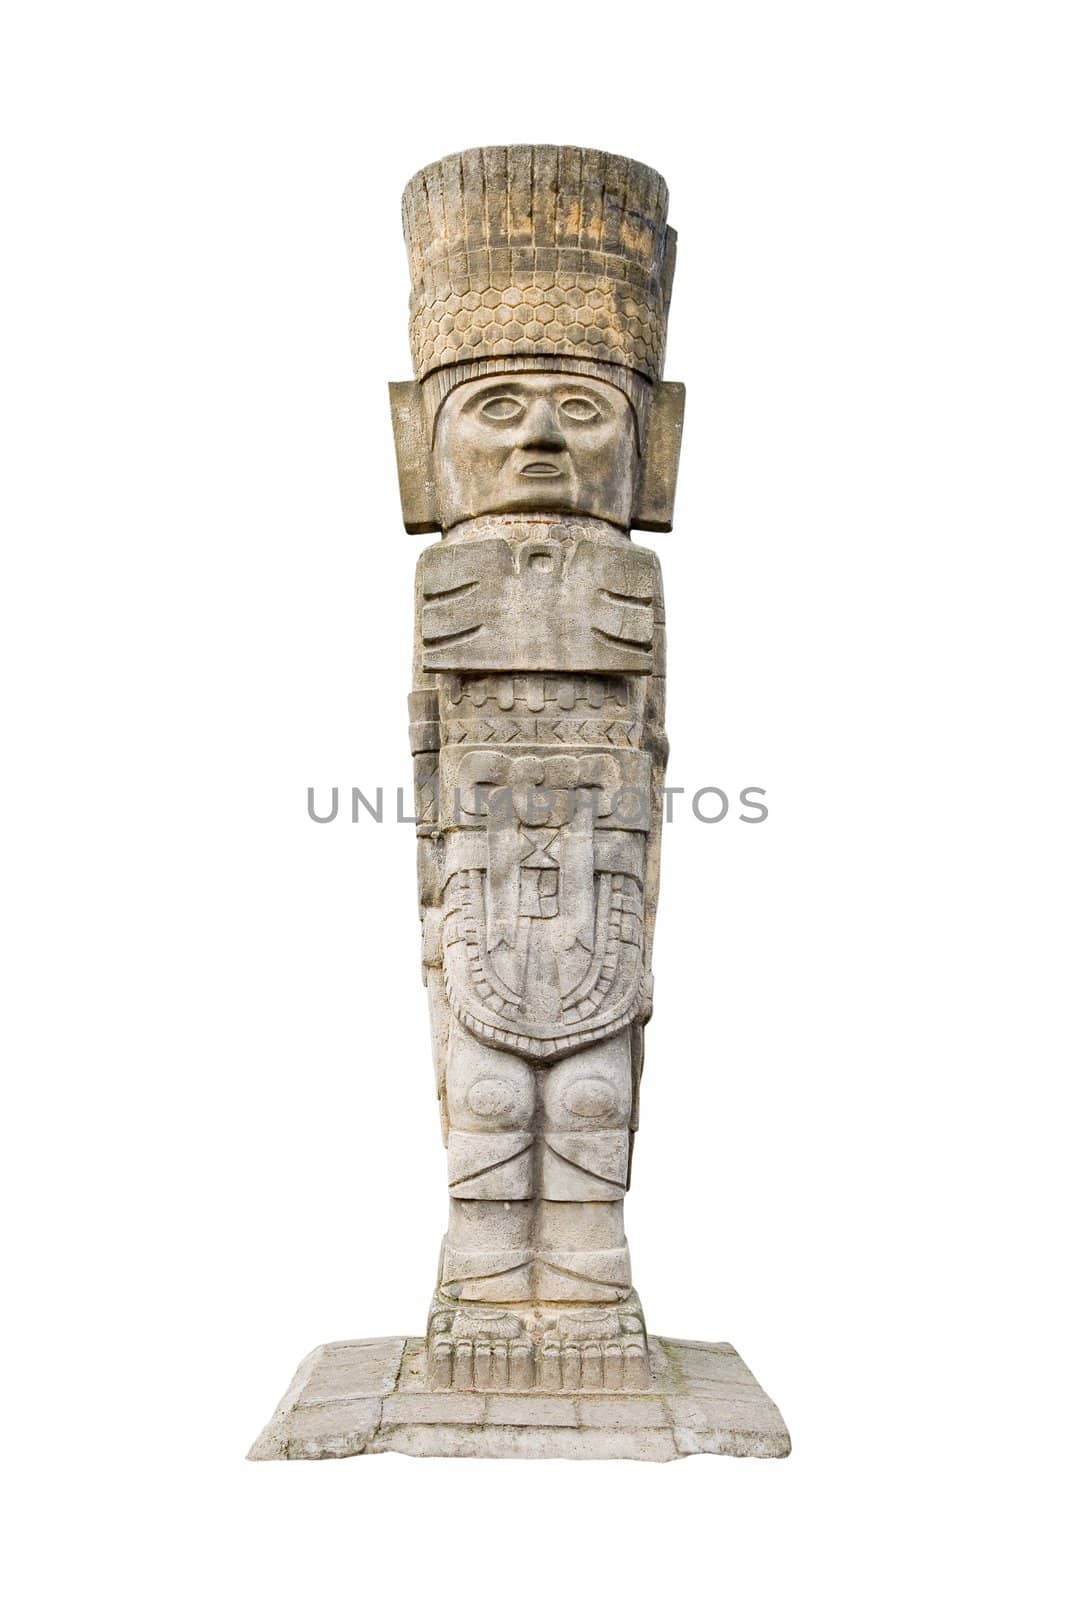 ancient aztec statue by furzyk73